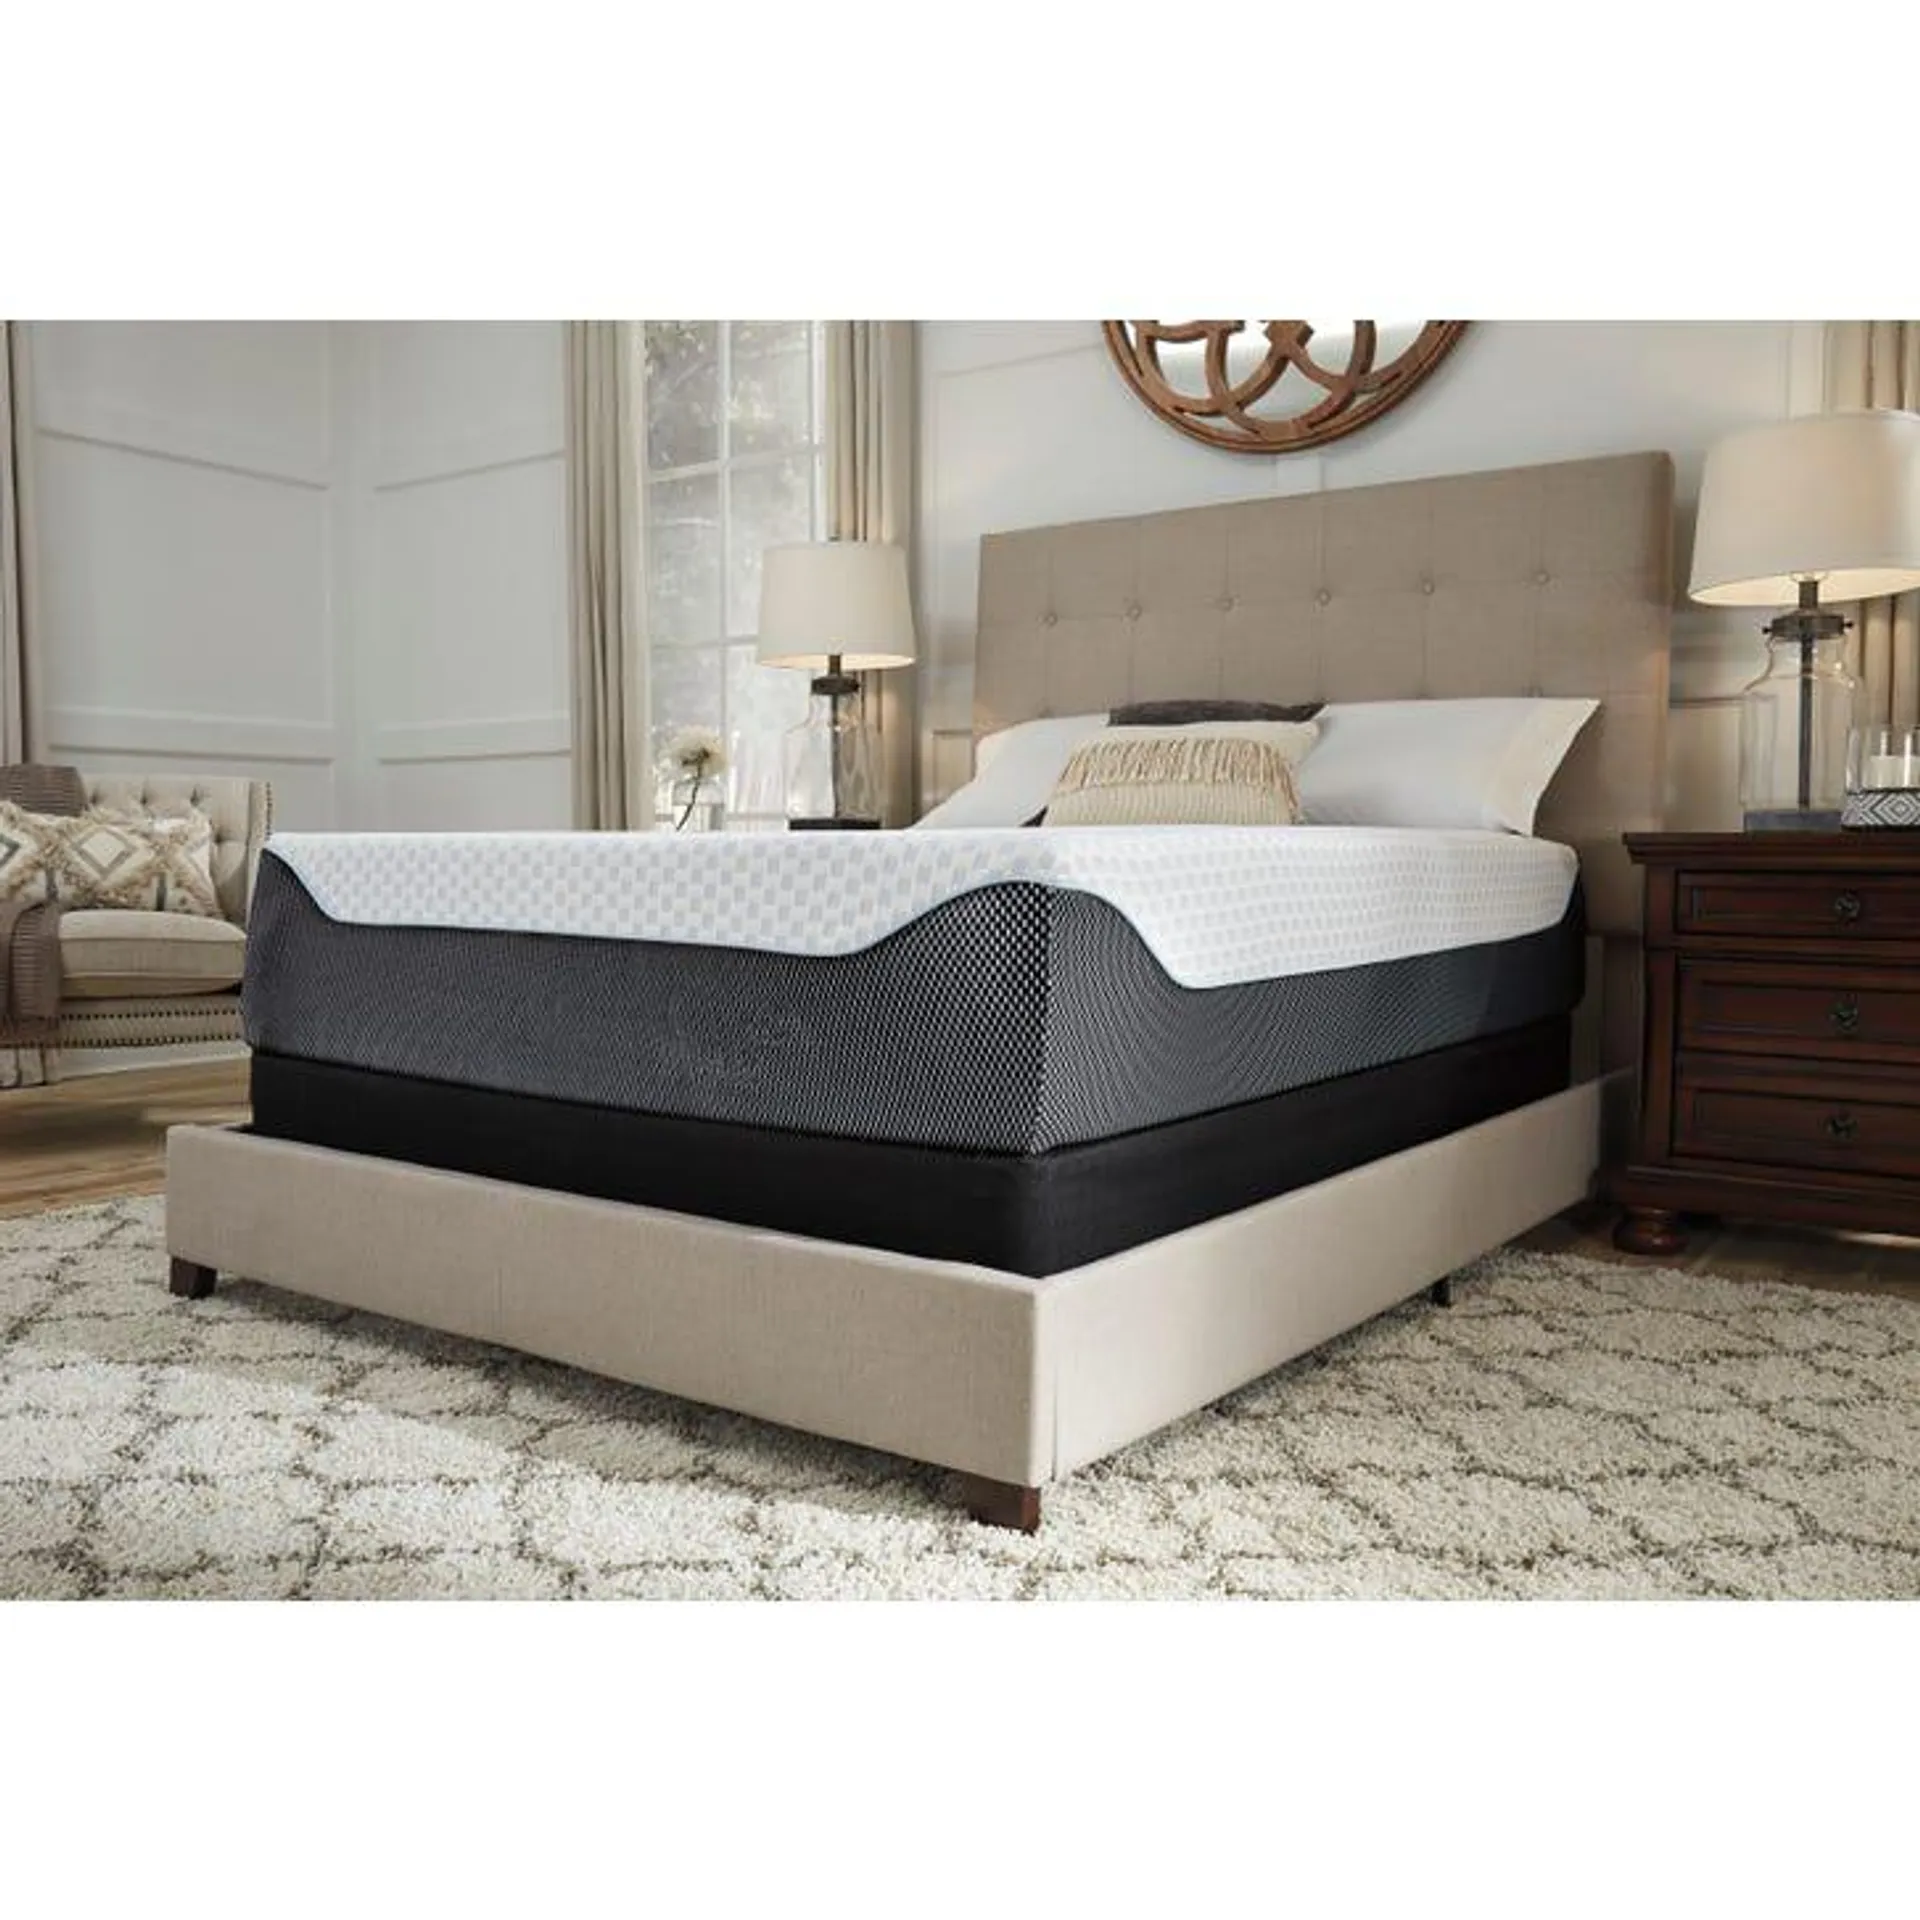 Queen Ashley Chime Elite 14 Inch Memory Foam Cushion Firm Bed in a Box Mattress